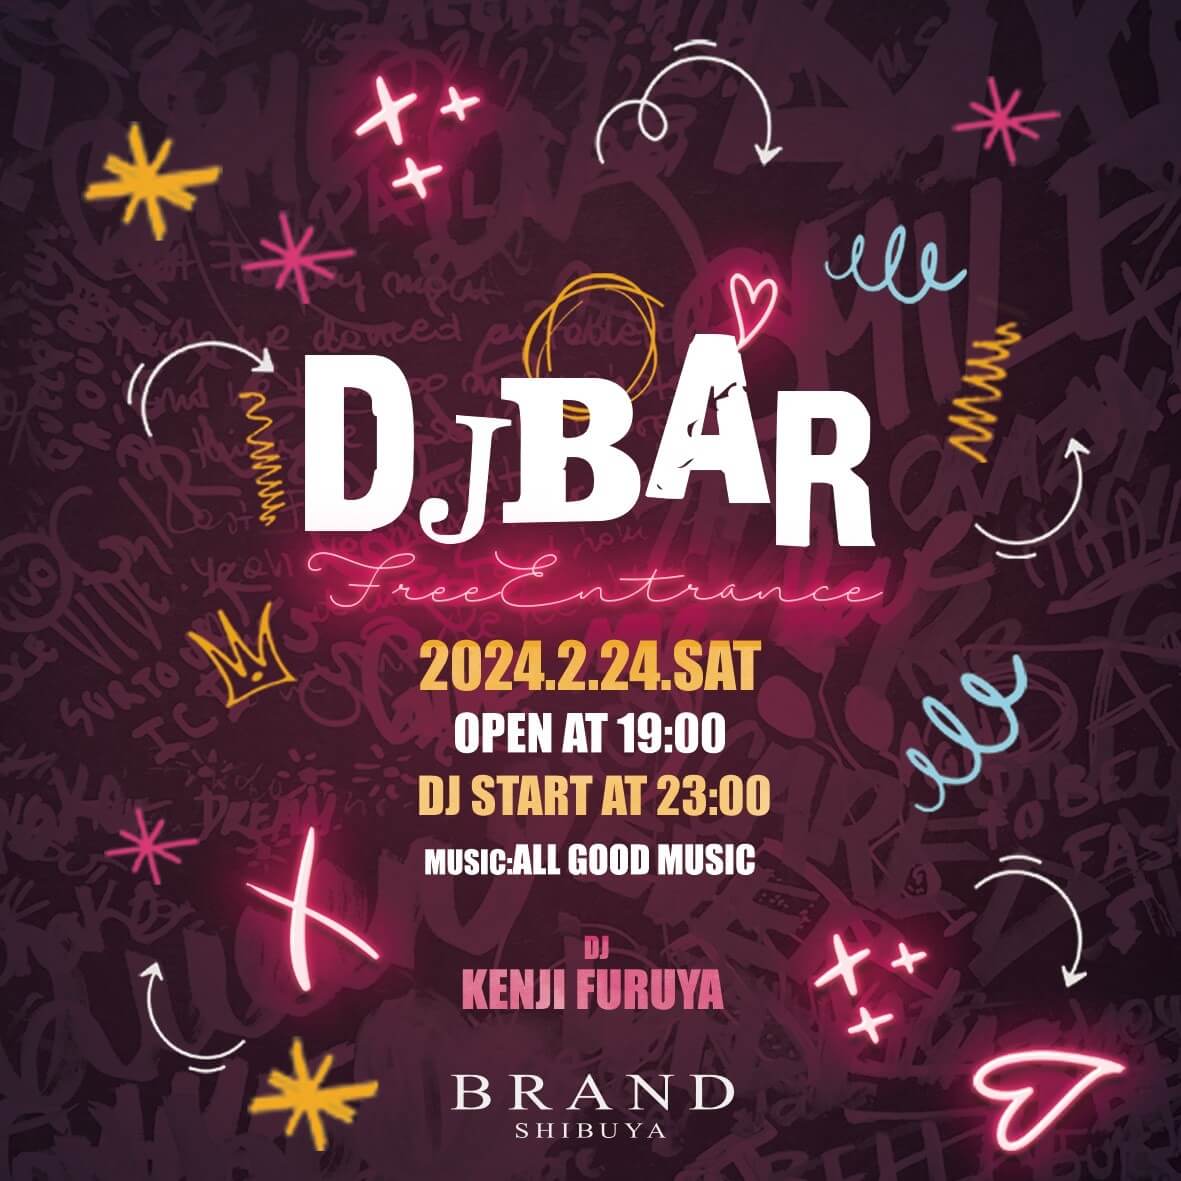 DJBAR 2024年02月24日（土曜日）に渋谷 クラブのBRAND SHIBUYAで開催されるALL MIXイベント